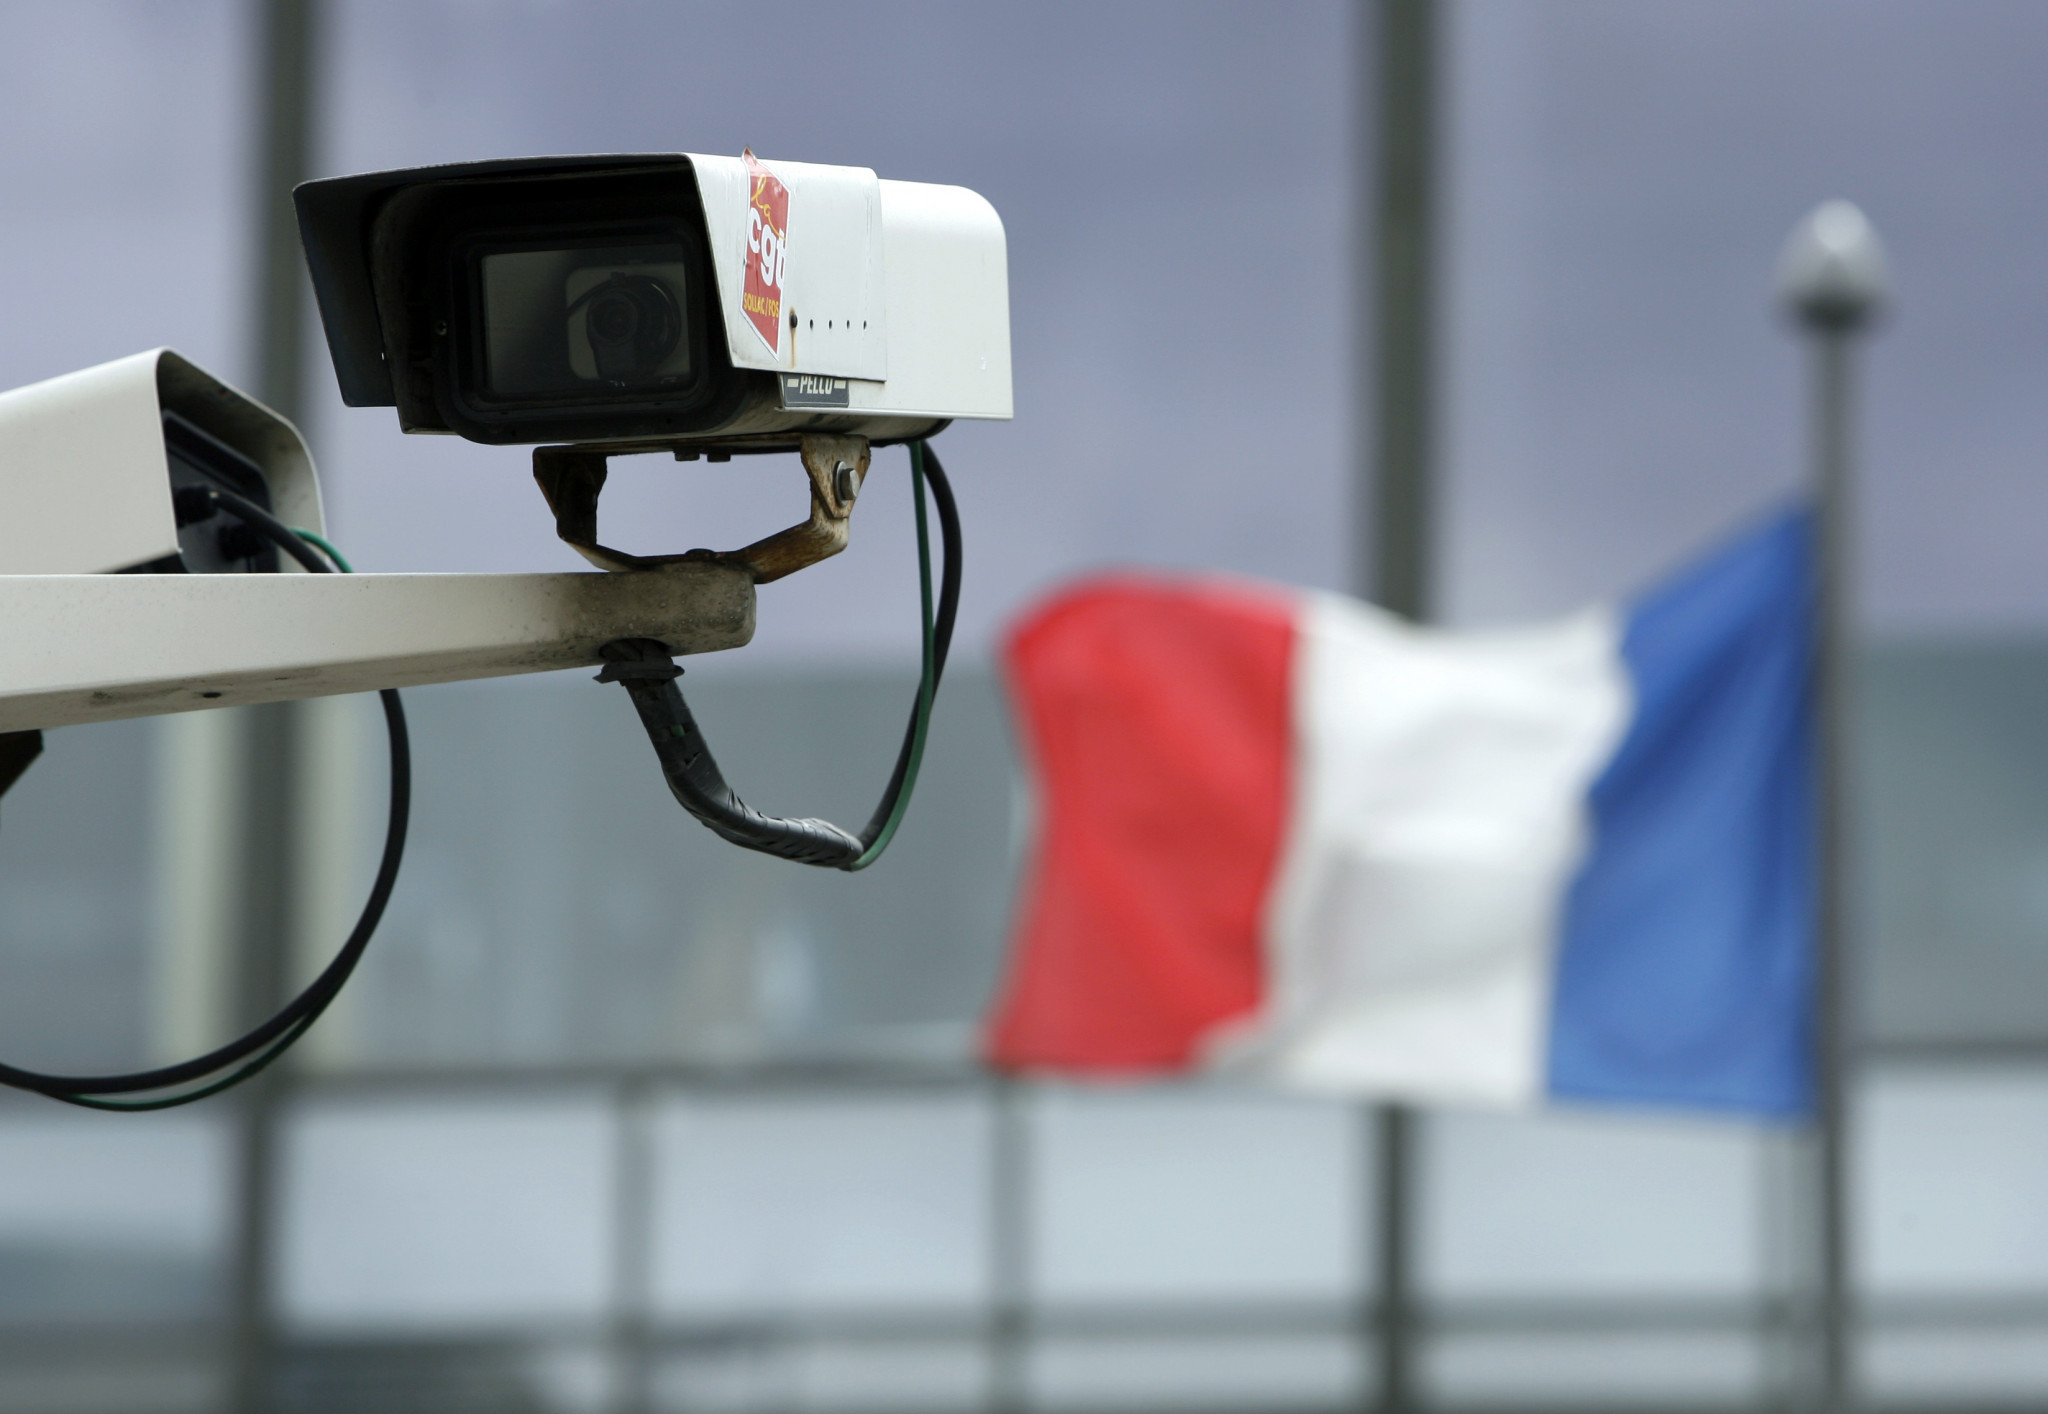 Civil society organisations including Human Rights Watch protest Paris 2024 surveillance bill